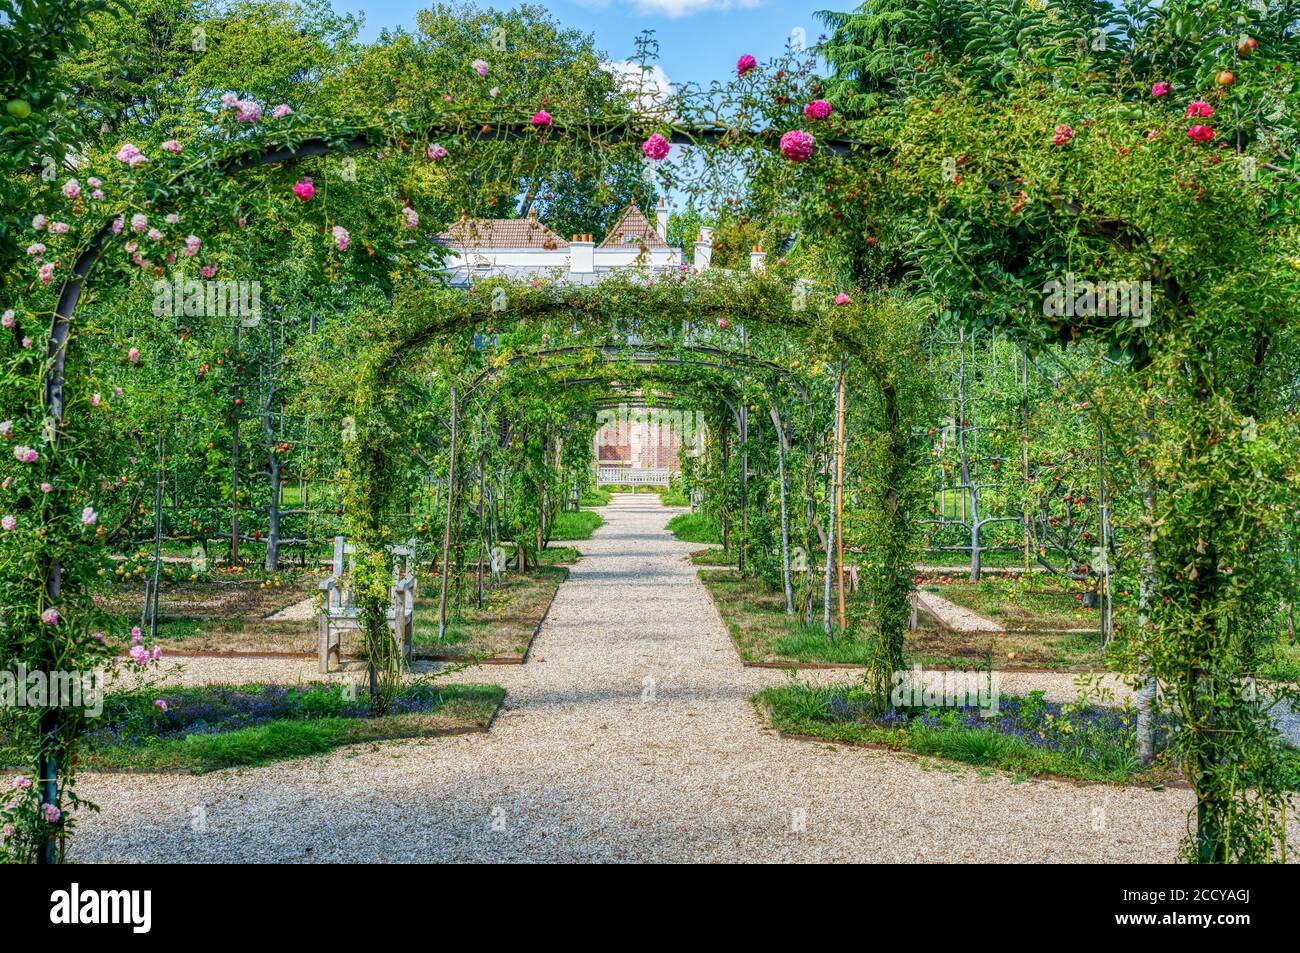 Jardin de roses dans le jardin Albert Kahn - Boulogne-Billancourt - France Banque D'Images